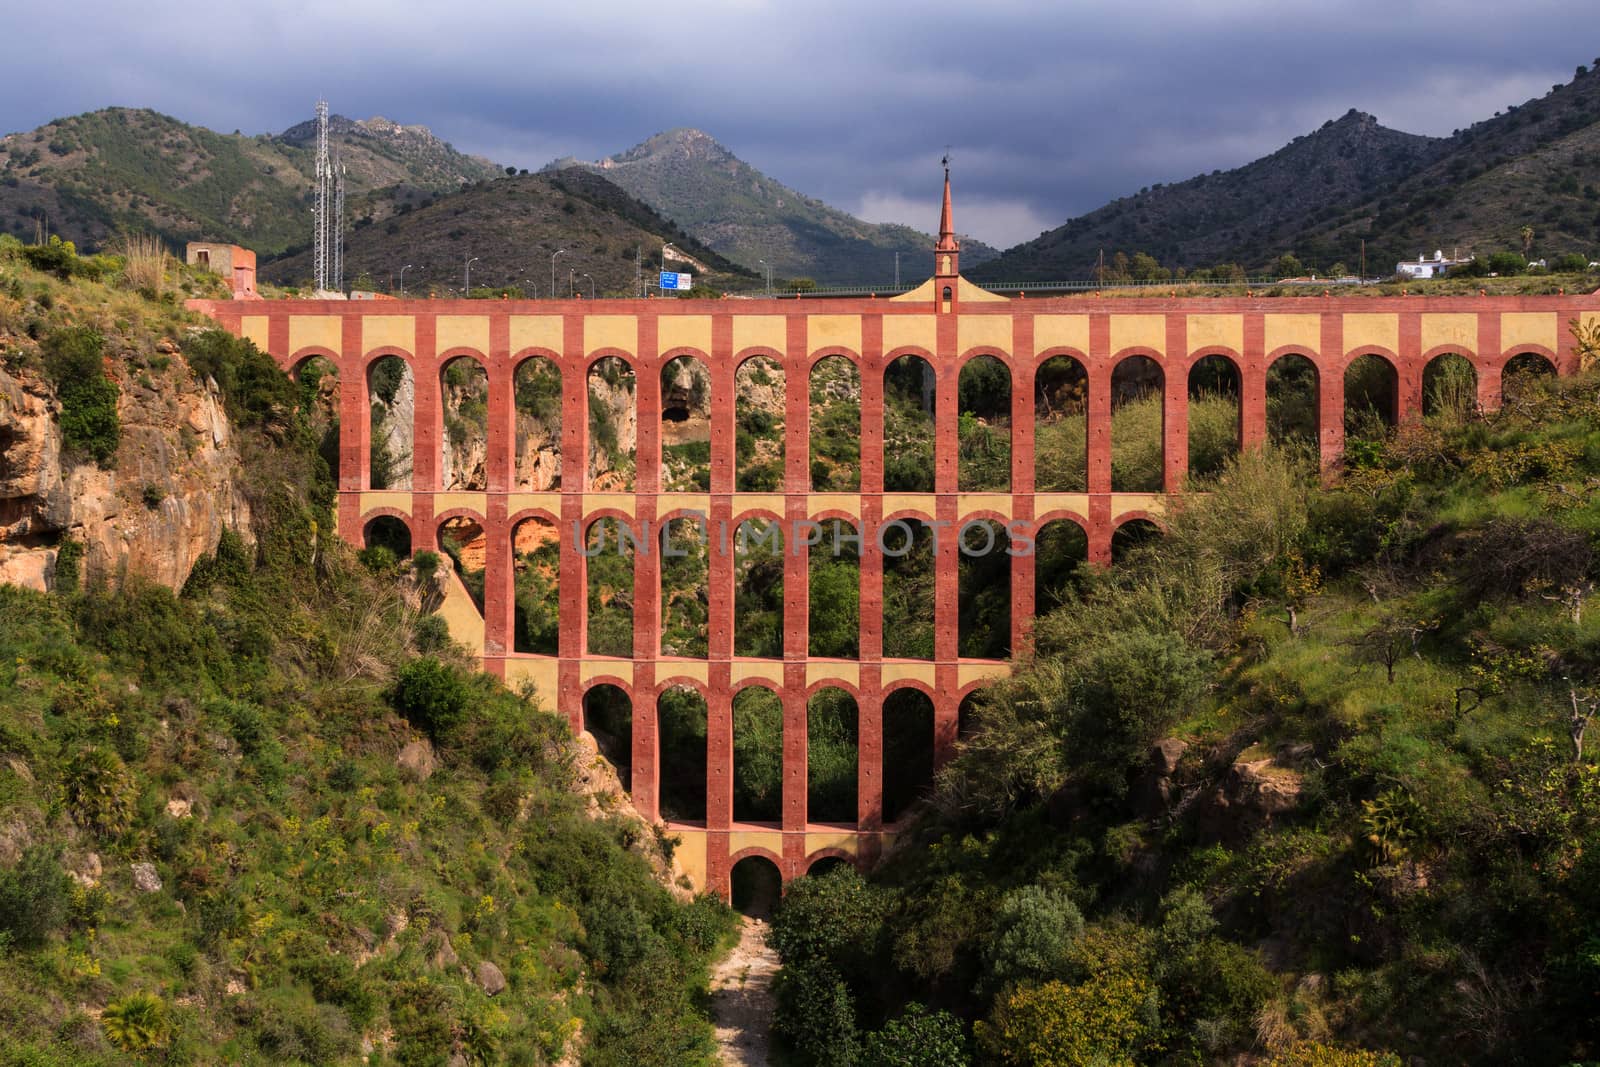 aqueduct named El Puente del Aguila in Nerja,Andalusia, Spain by Nobilior